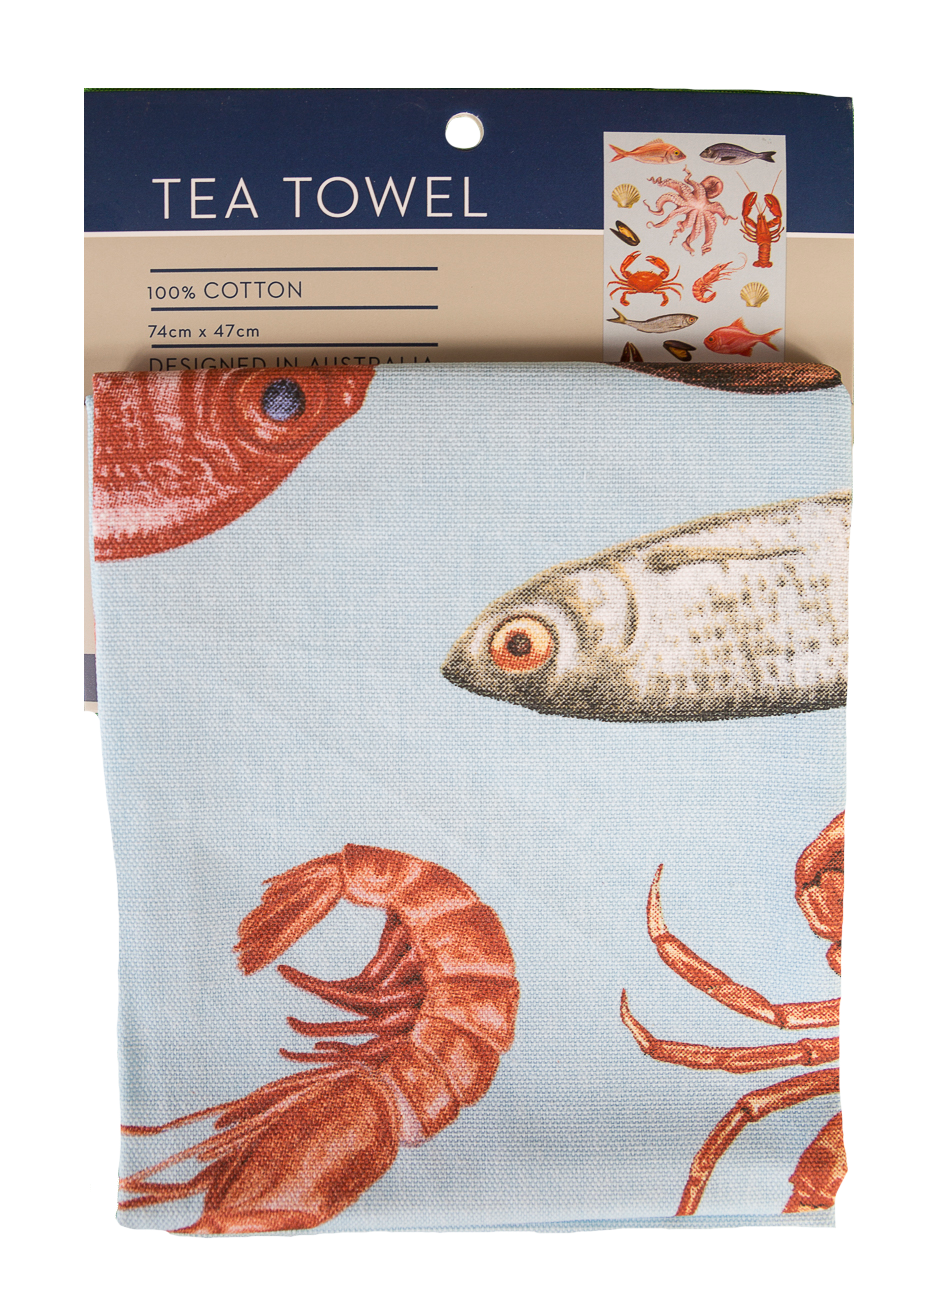 Tea Towel - Fisherman's Basket